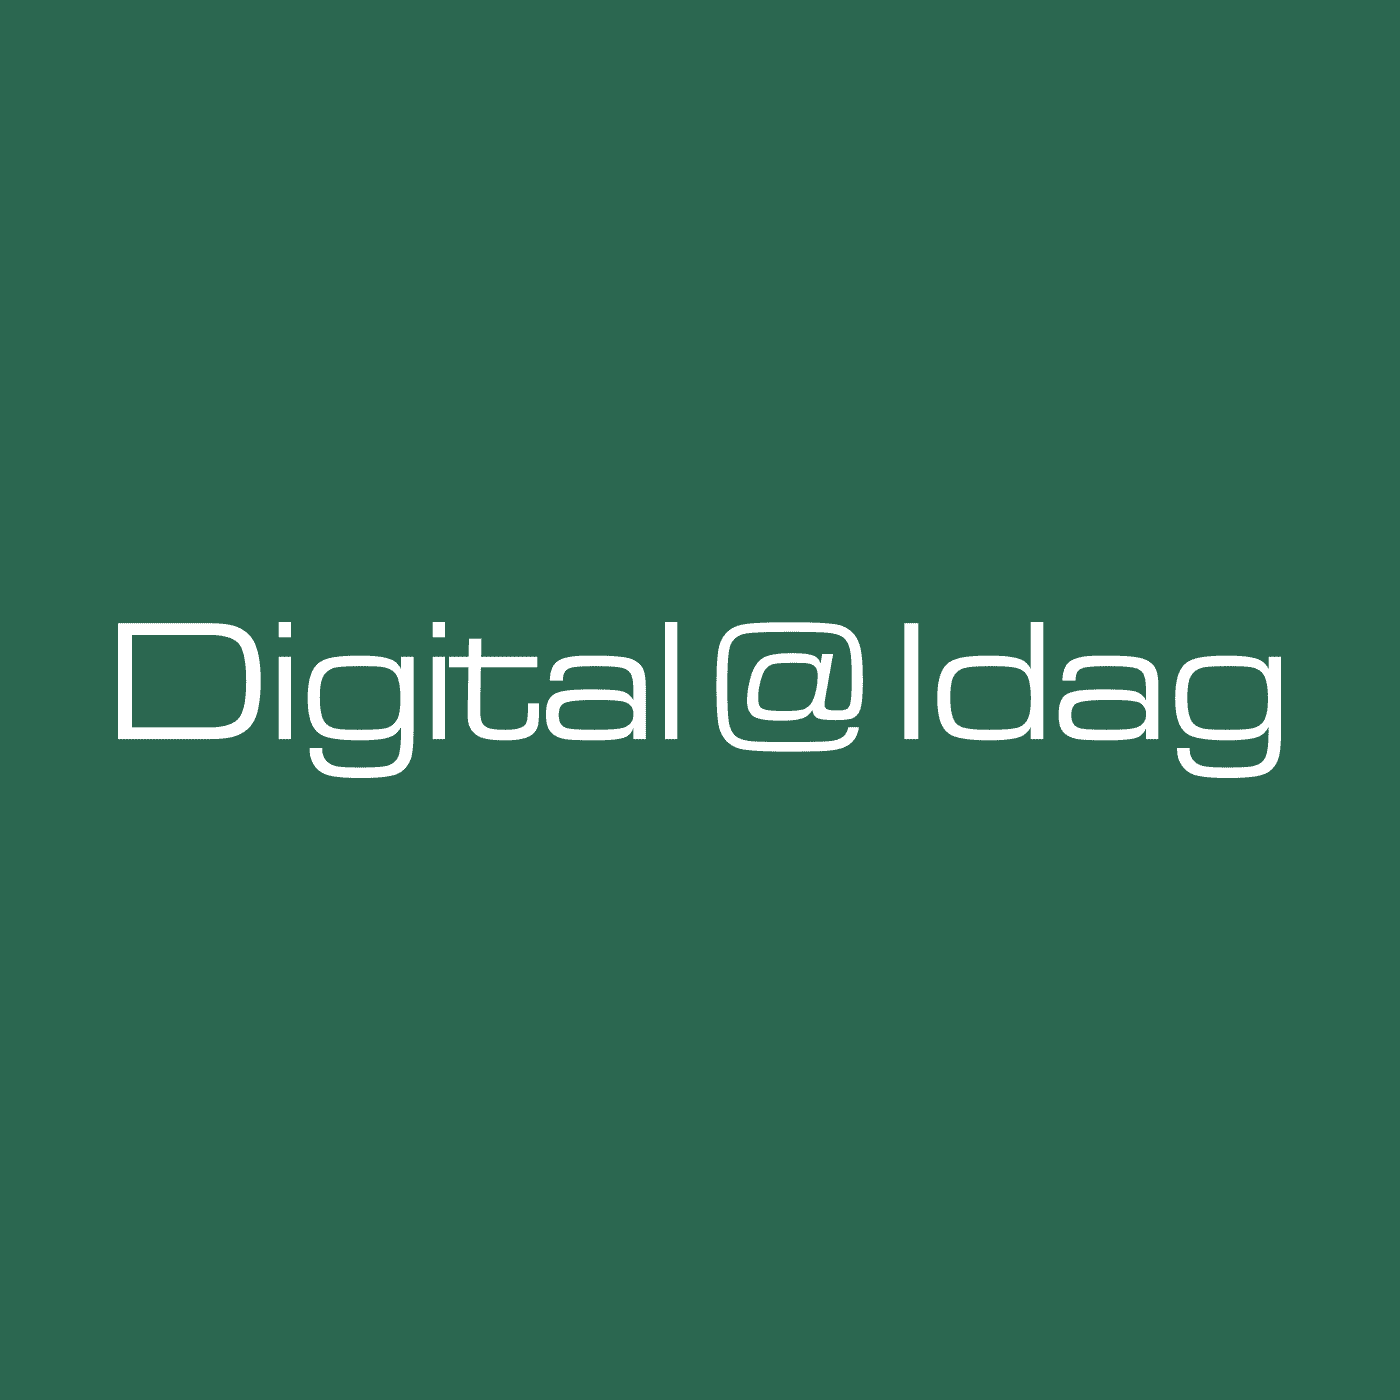 digitalidag-logo-1400